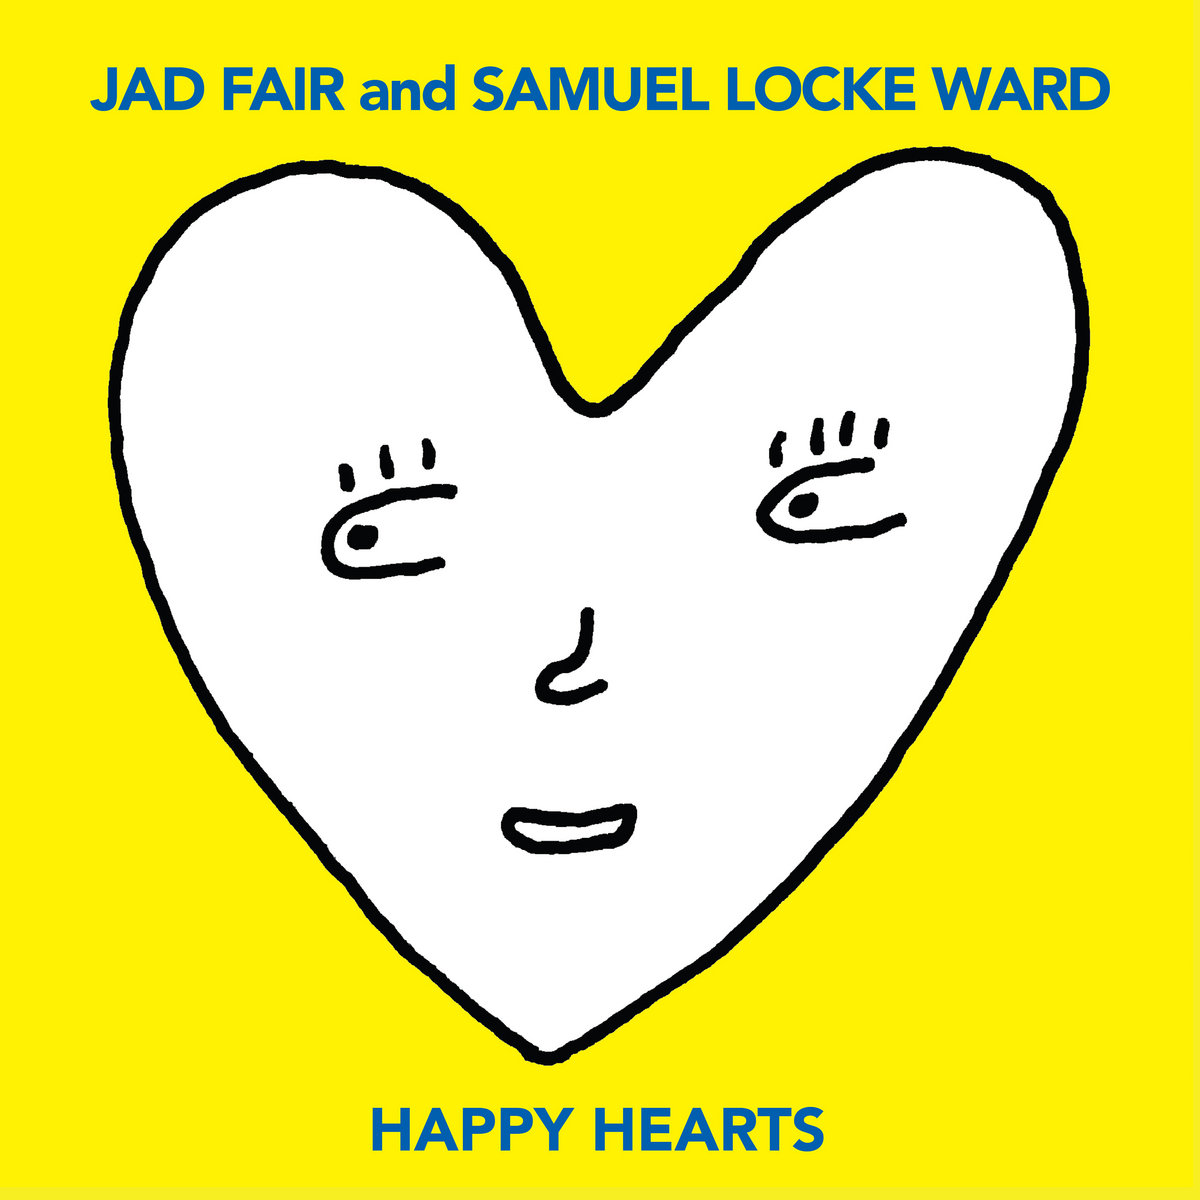 Verse/Chorus/Bliss – “Happy Hearts” by Jad Fair and Samuel Locke Ward